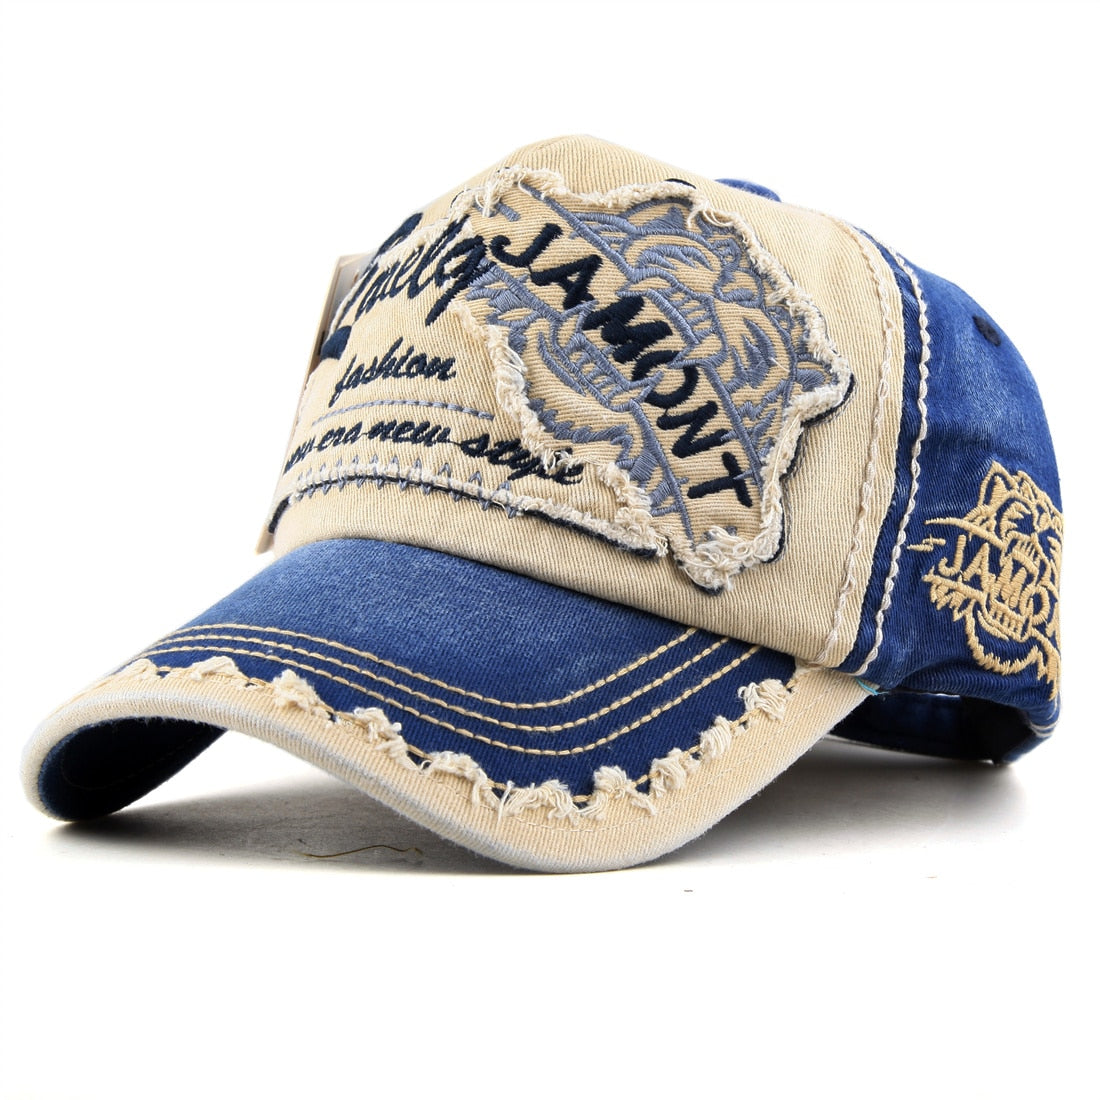 Xthree Cotton Fasion Leisure Baseball Cap Hat for Men Snapback Hat Casquette Women&#39;s Cap Wholesale Fashion Accessories